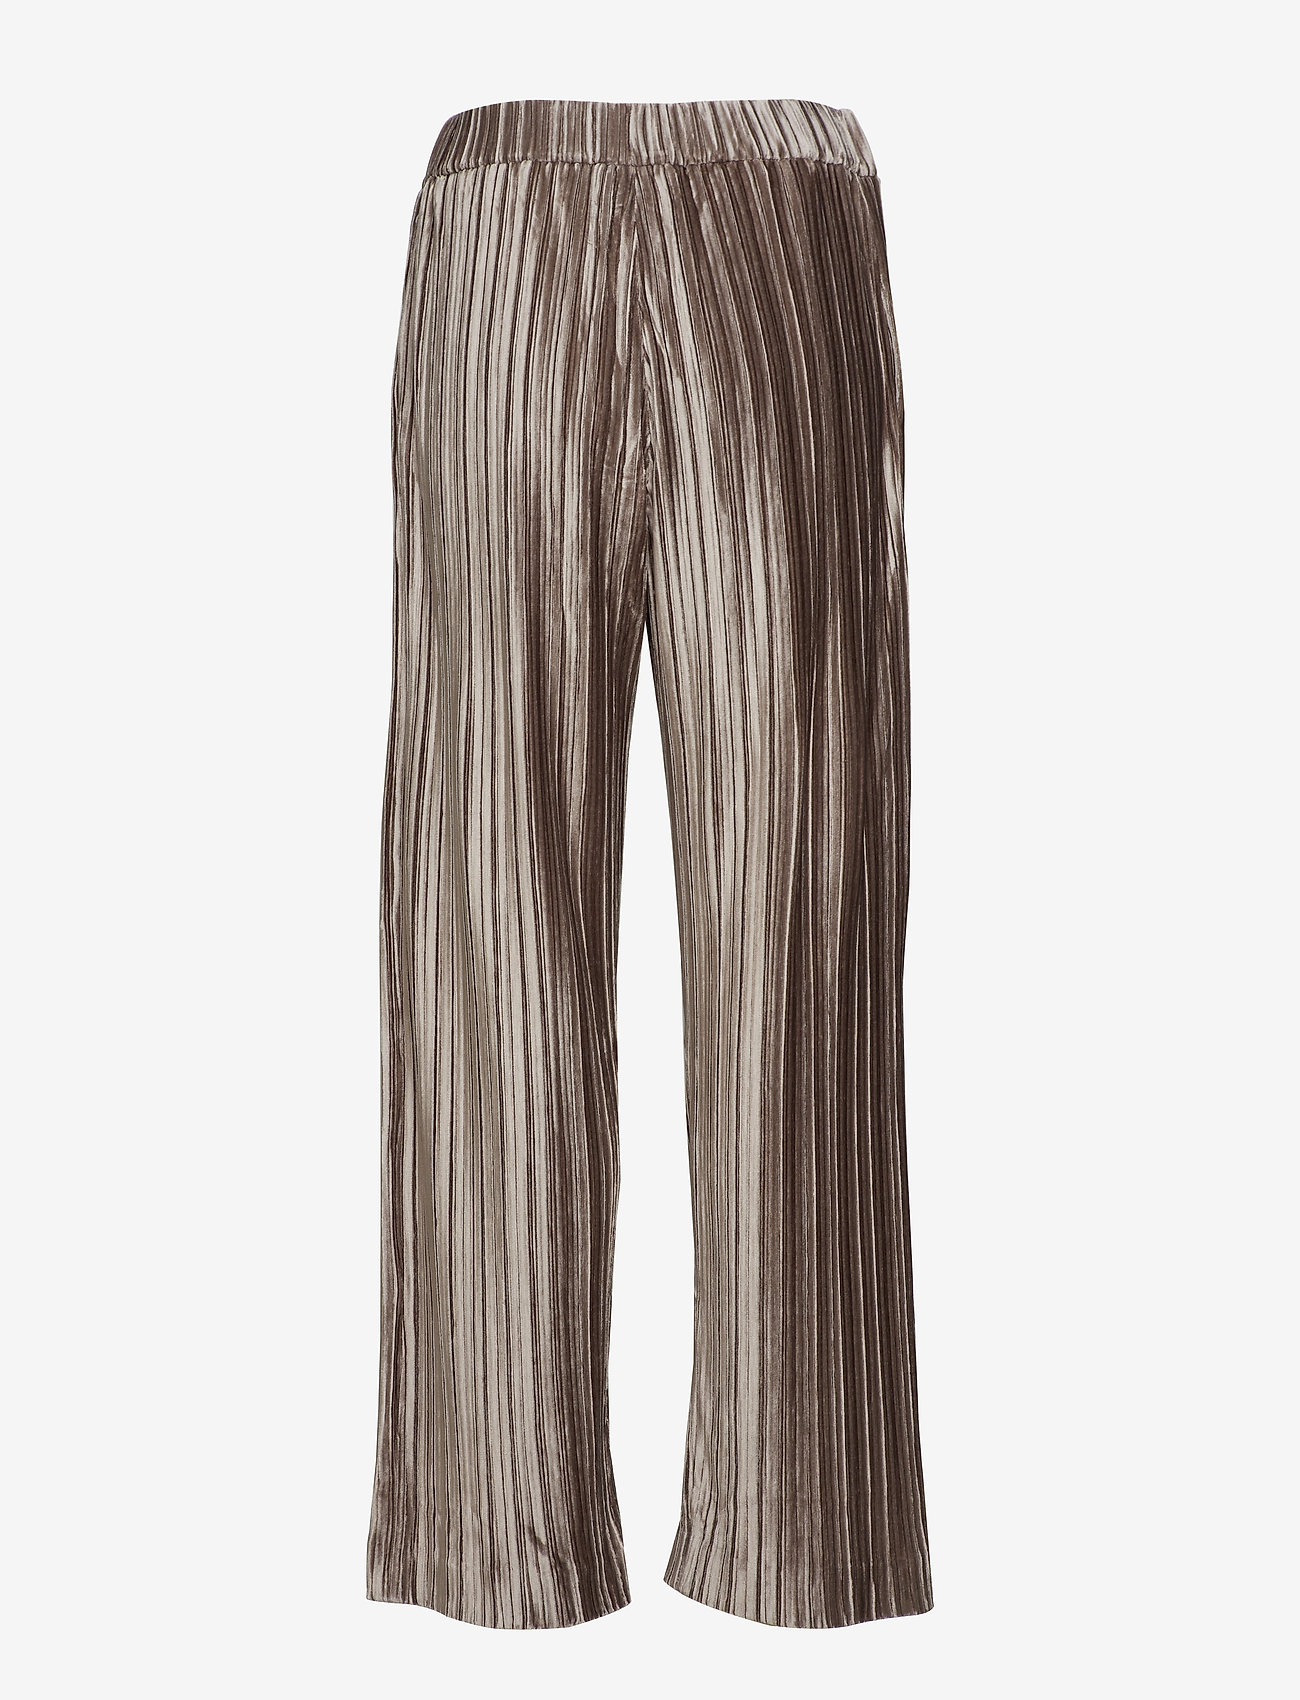 Filippa K - Velvet Plissé Trousers - wide leg trousers - taupe - 1